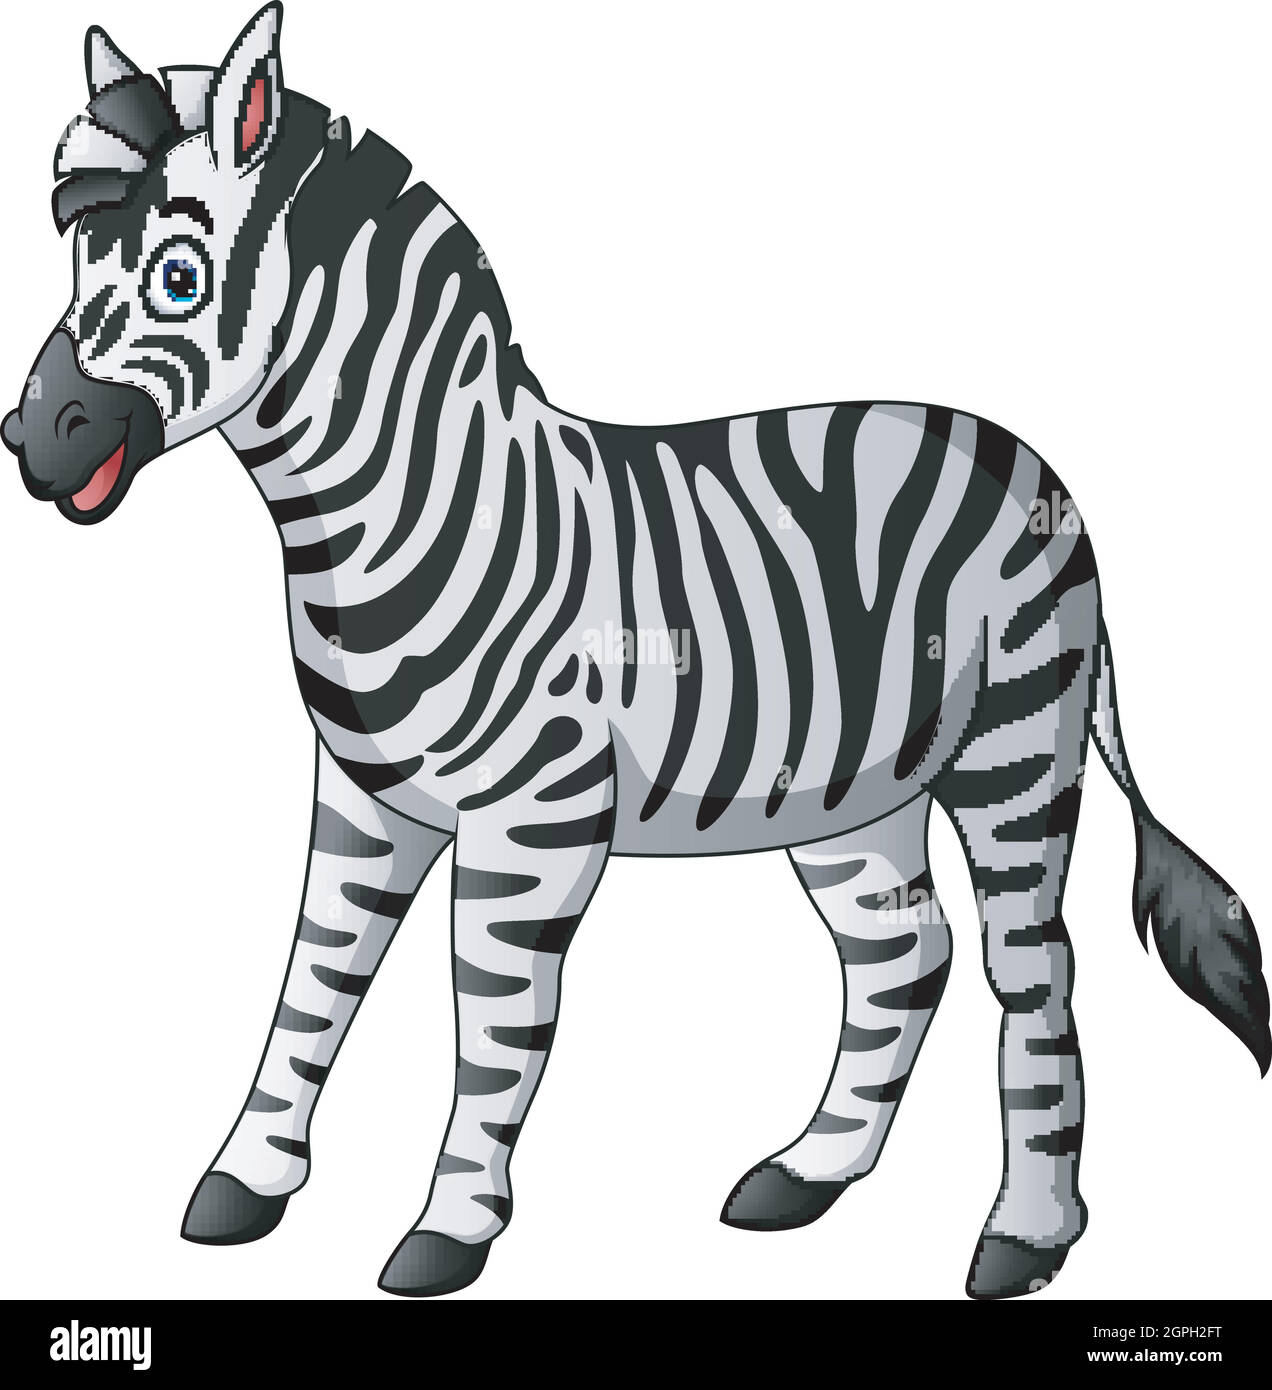 Zebra Cartoon Images